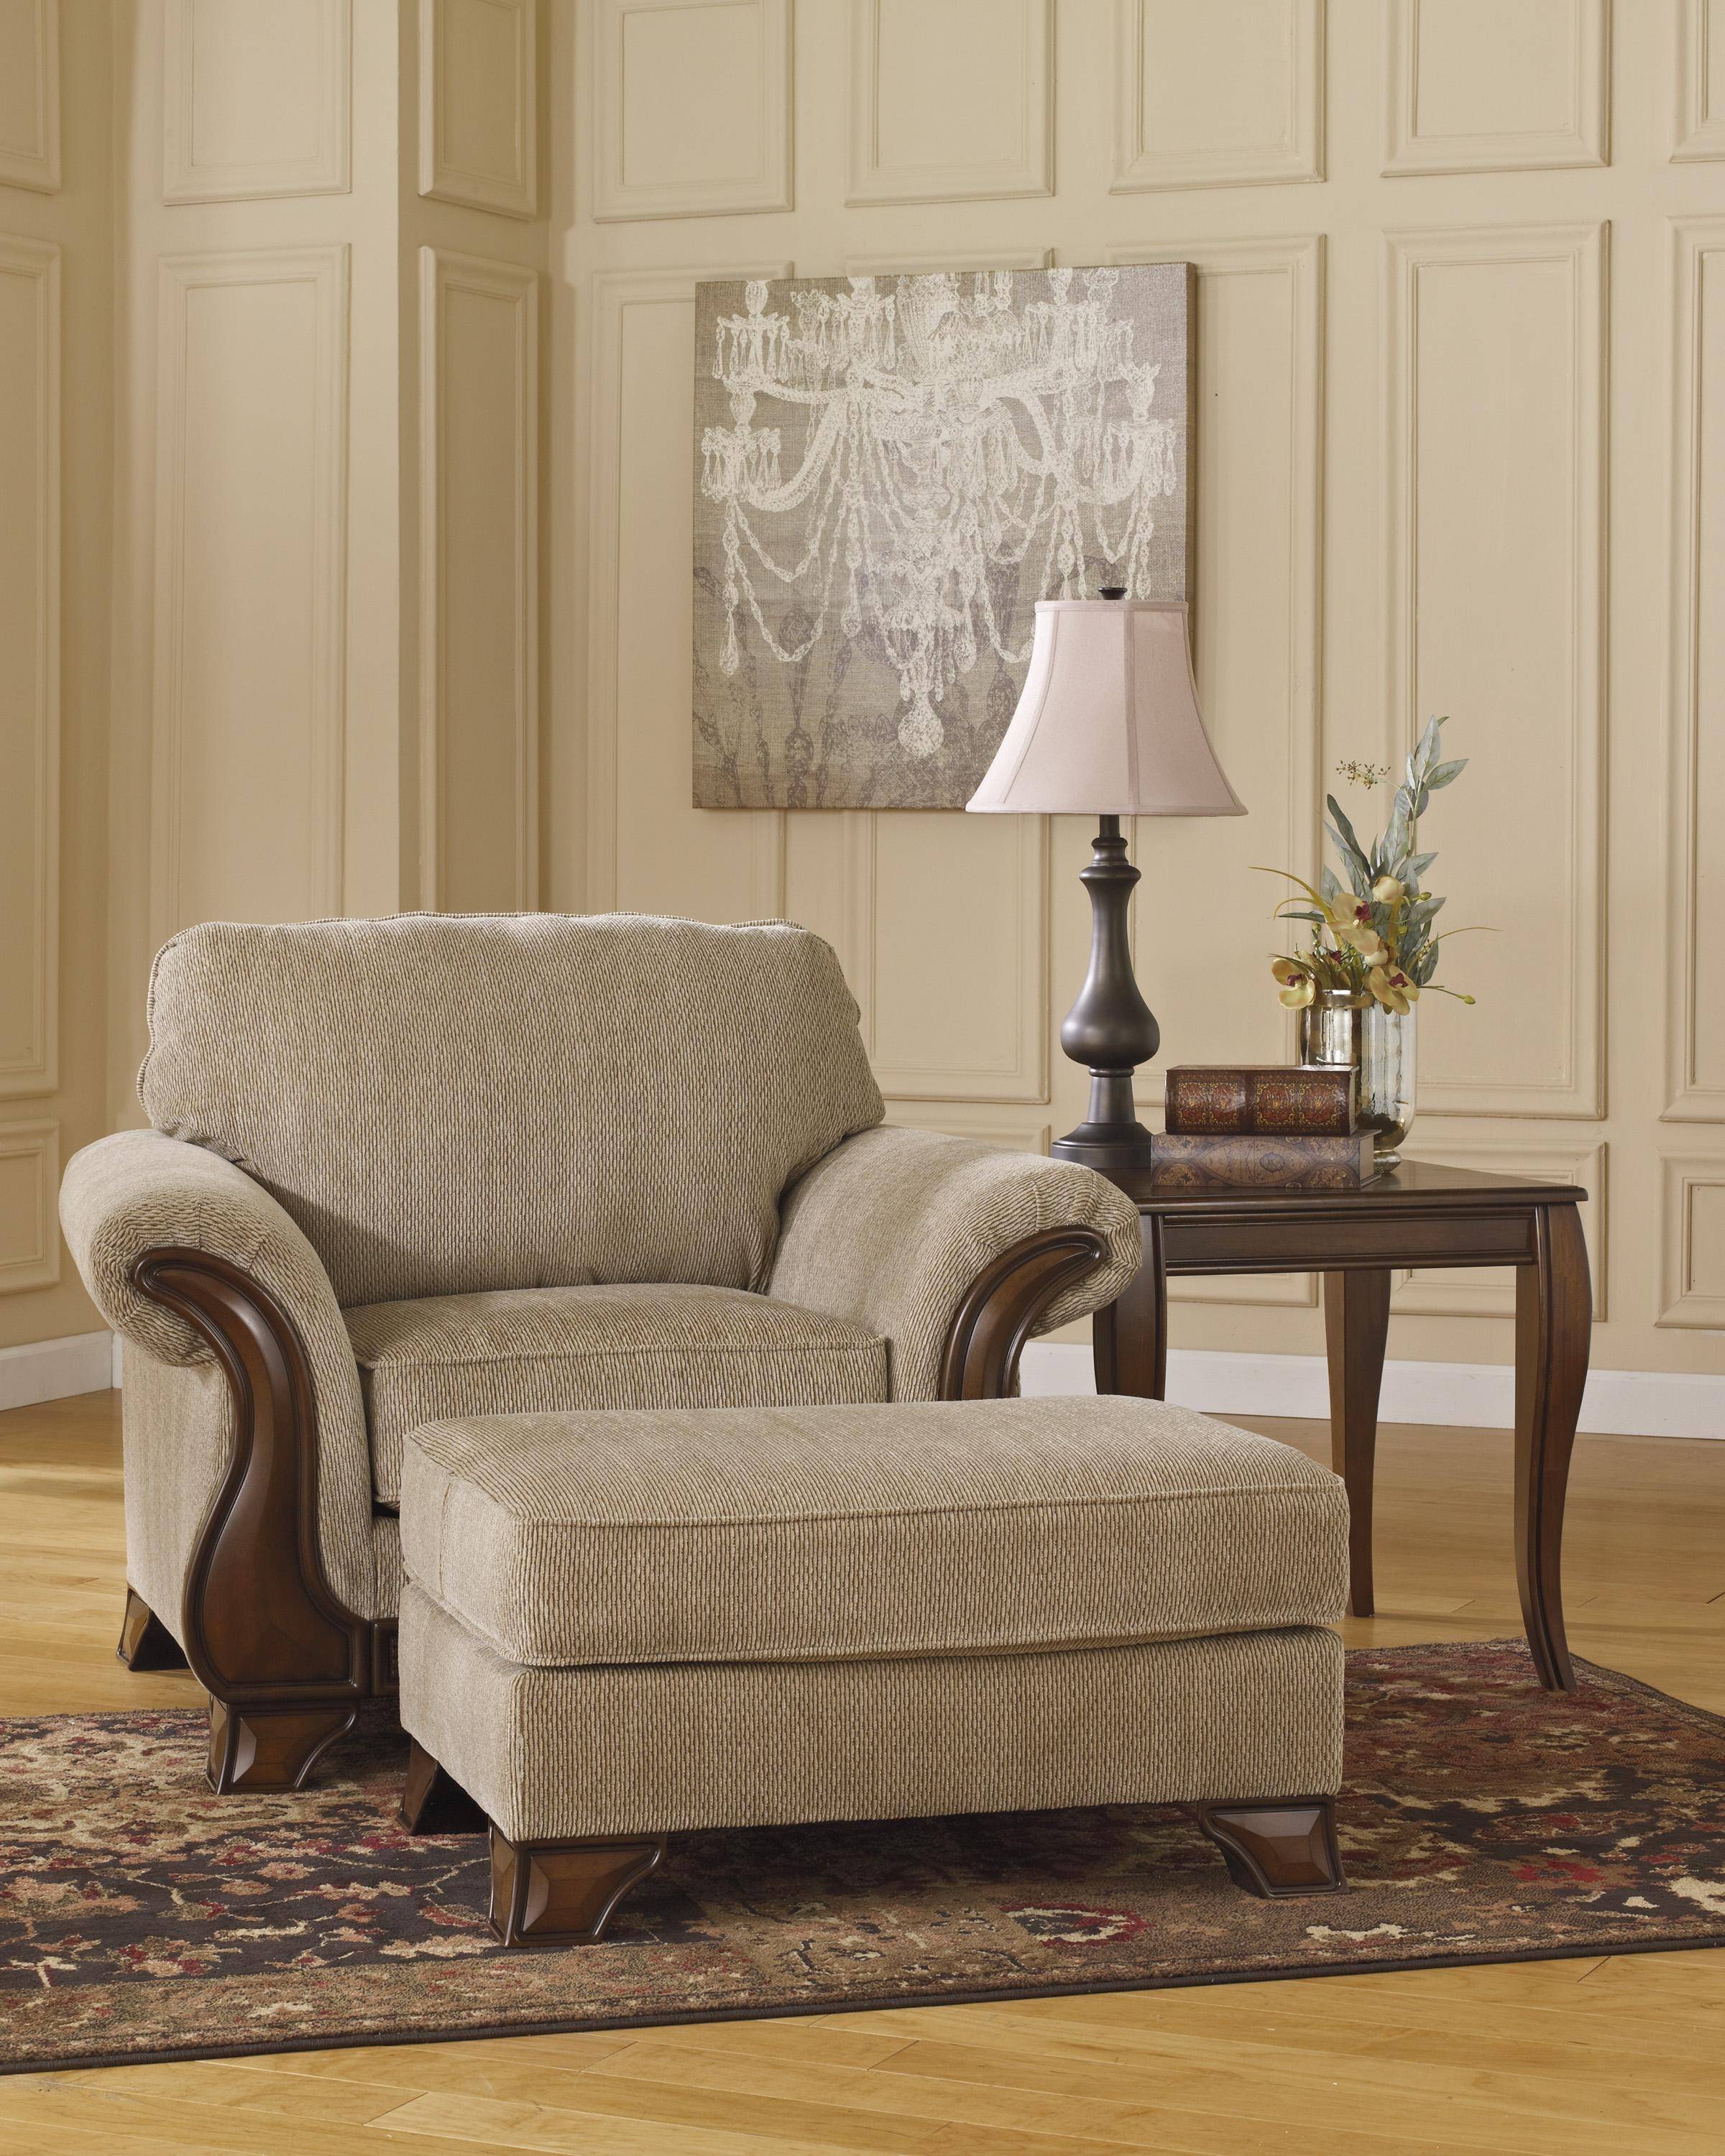 Buy Ashley Lanett Living Room Set 4 Pcs in Barley, Fabric online